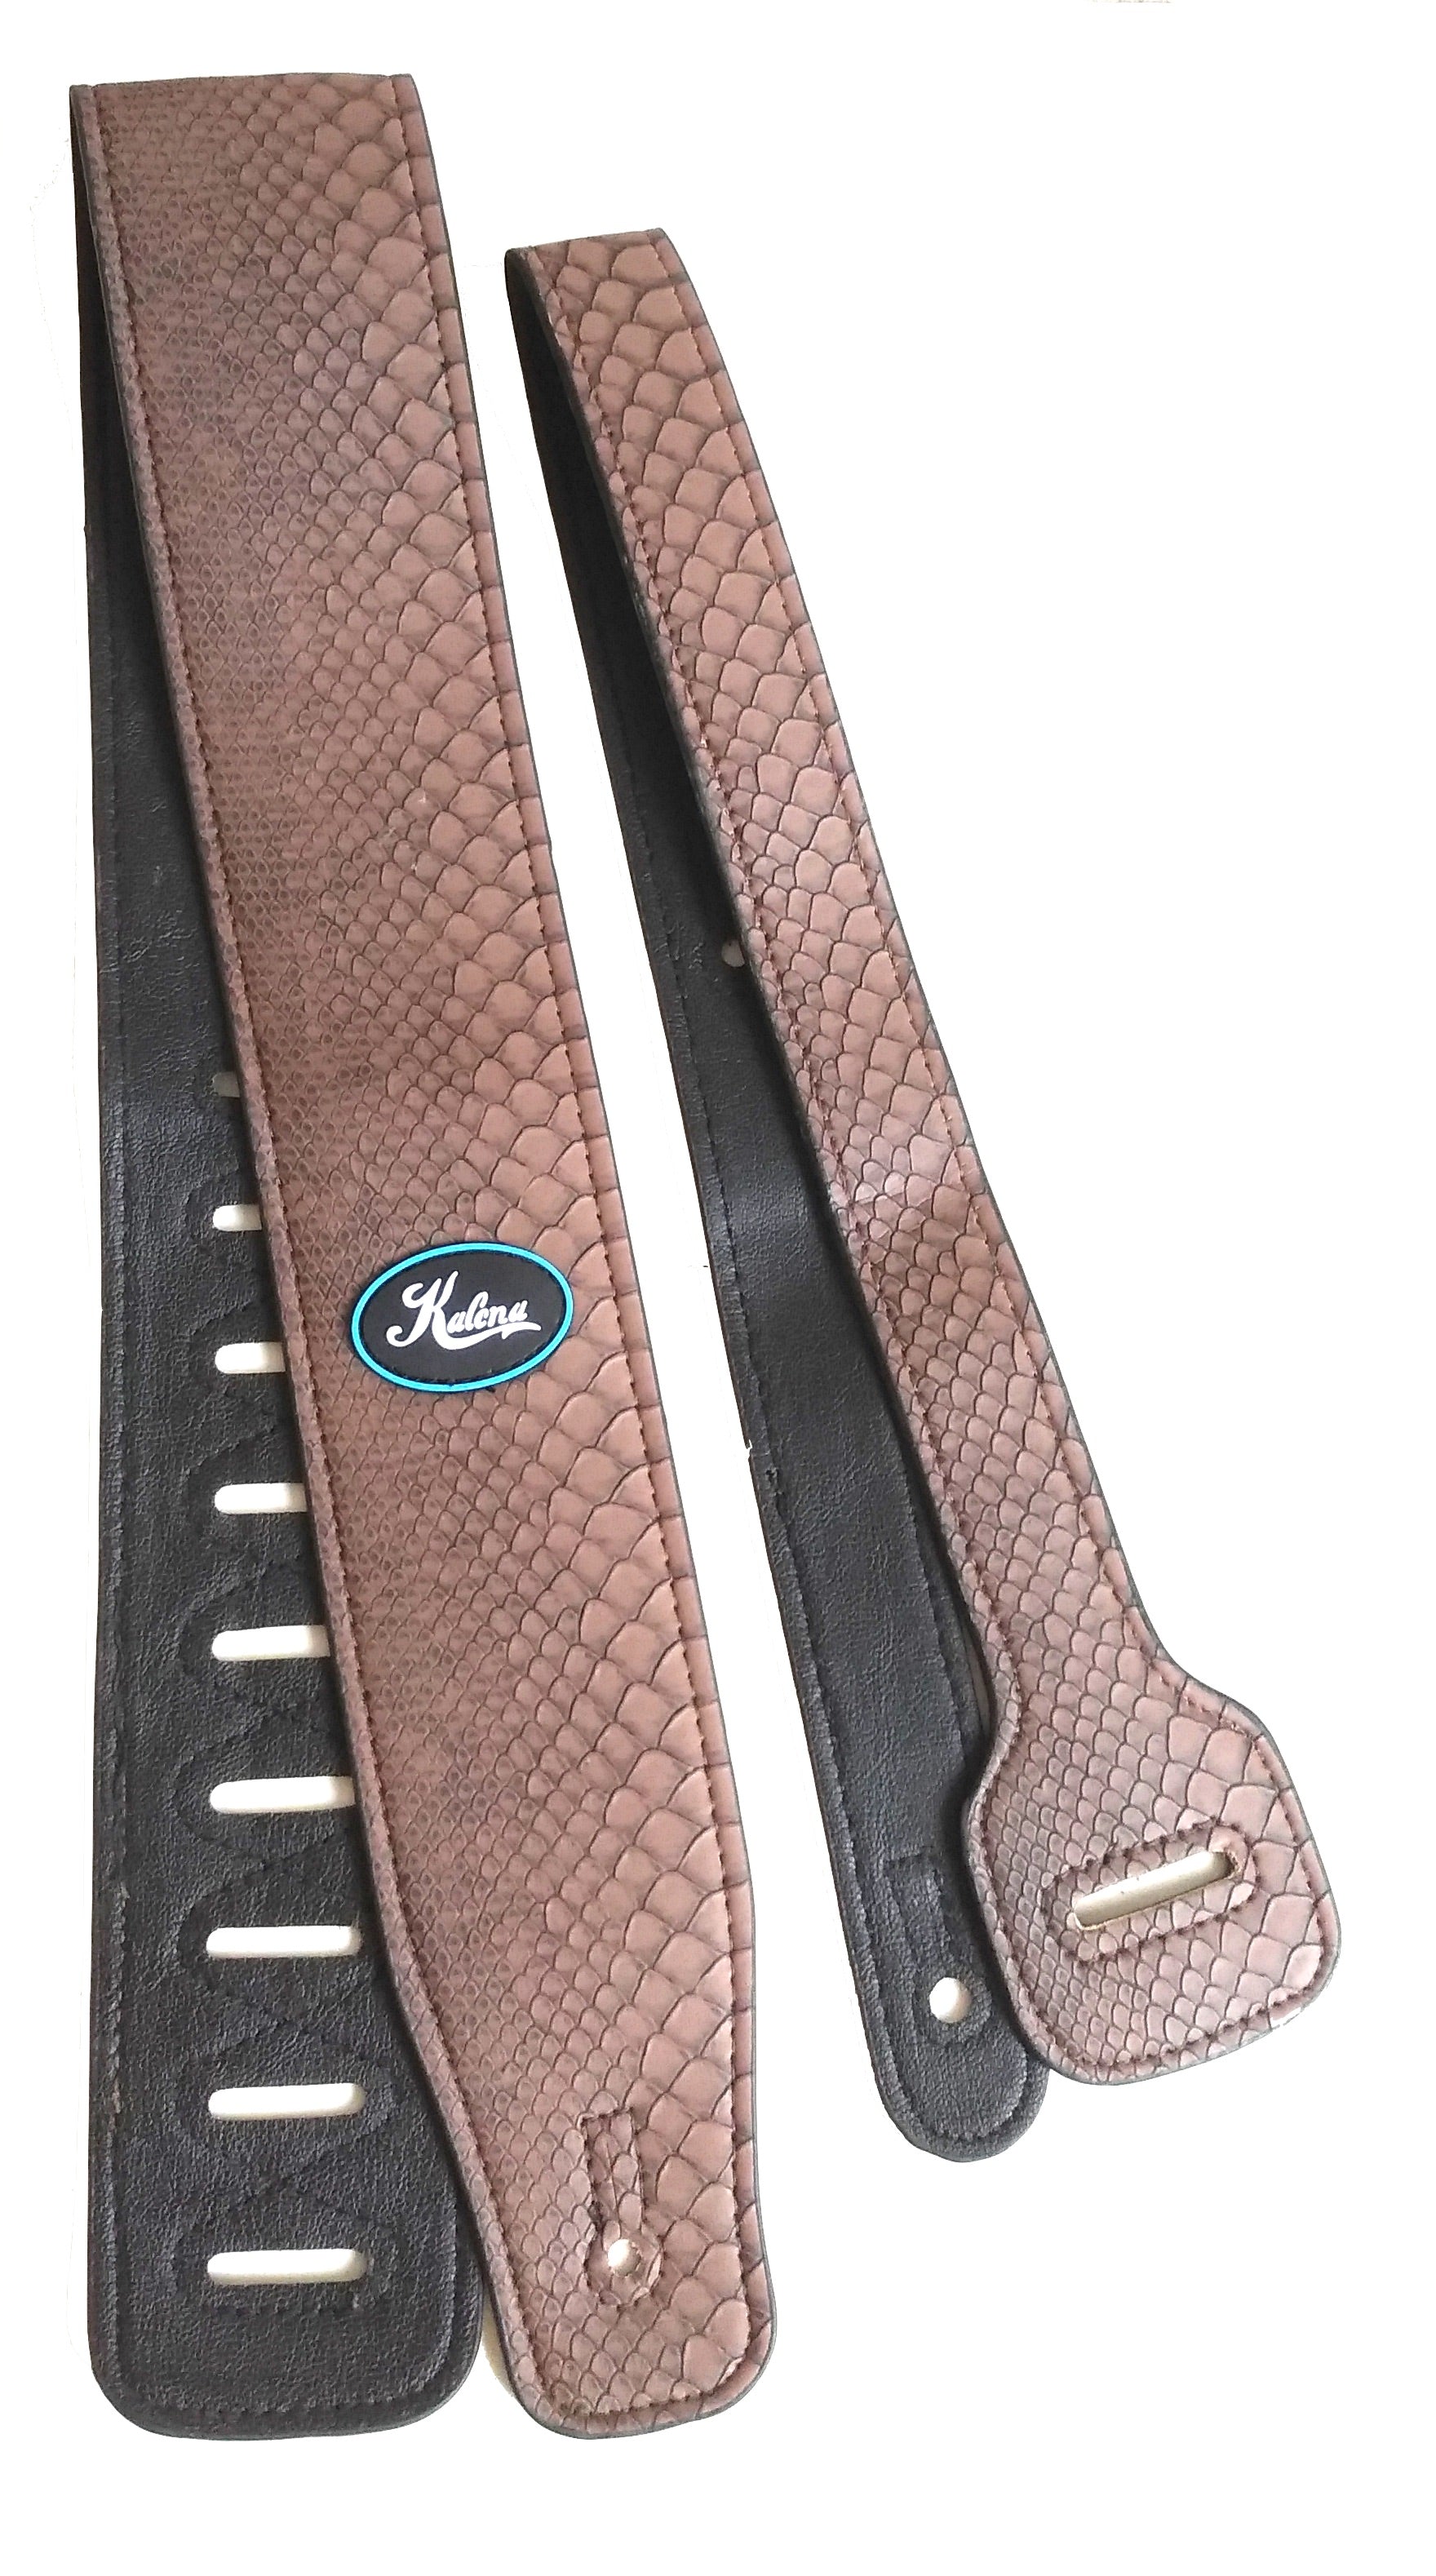 Kalena 2 Pin Snake Guitar Strap 2 Piece Style (PU+MICROFIBER LEATHER) - Kalena Instruments / Coffee Snake